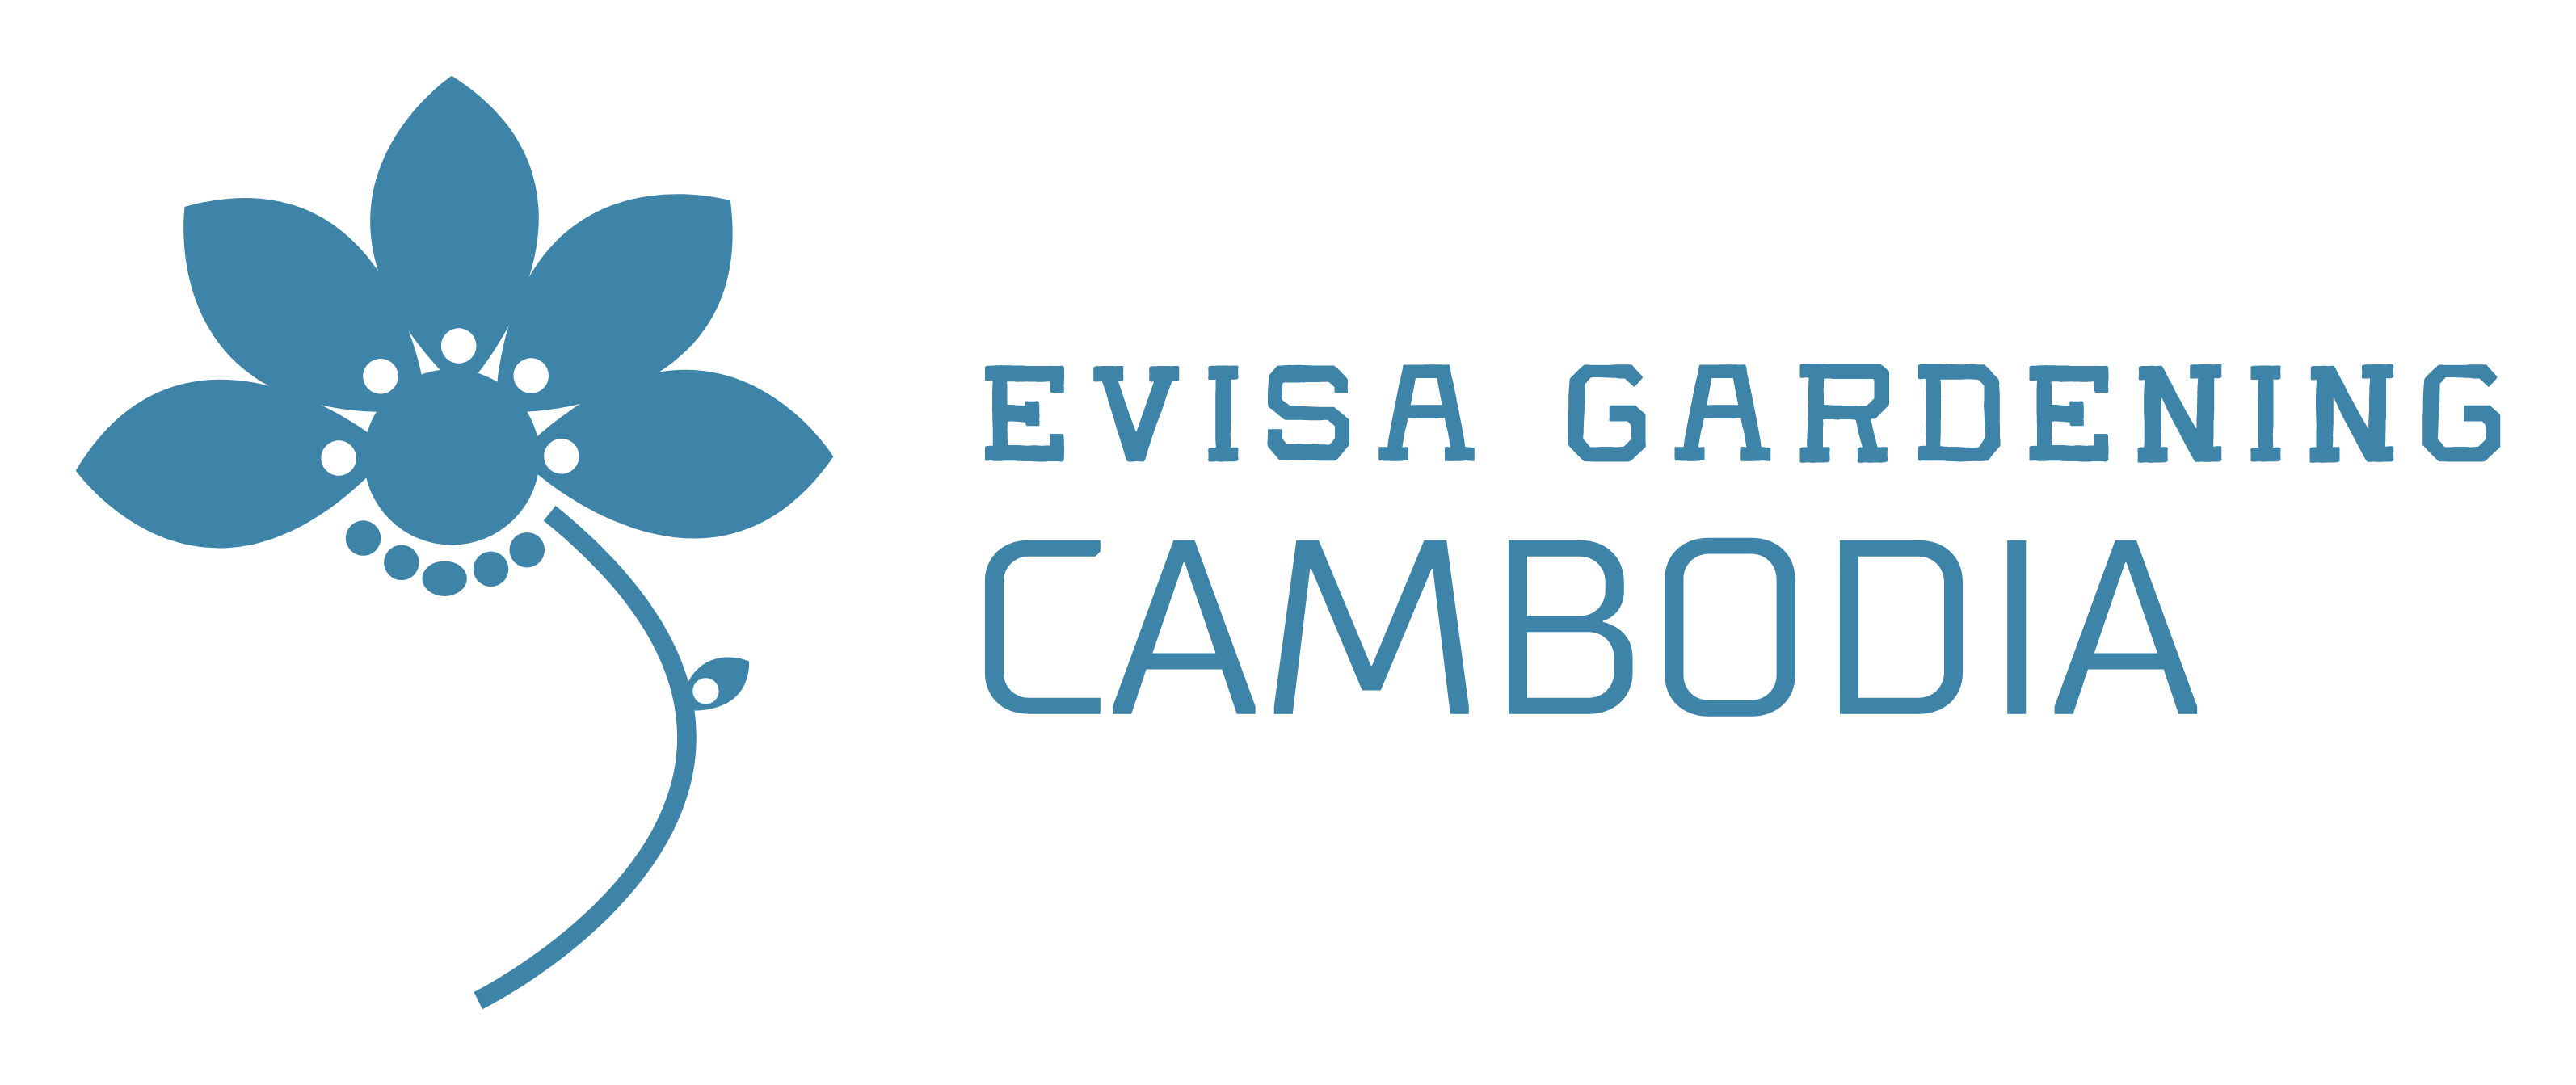 cambodia evisa gardening logo